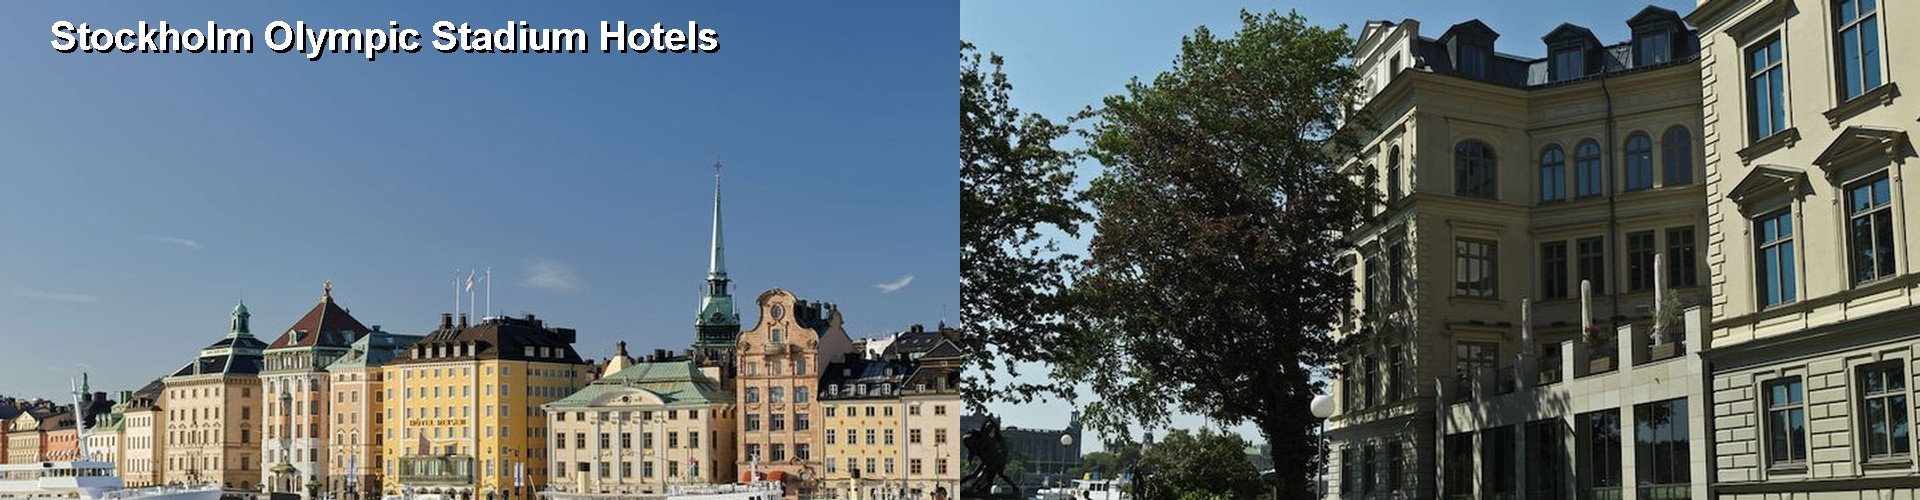 5 Best Hotels near Stockholm Olympic Stadium